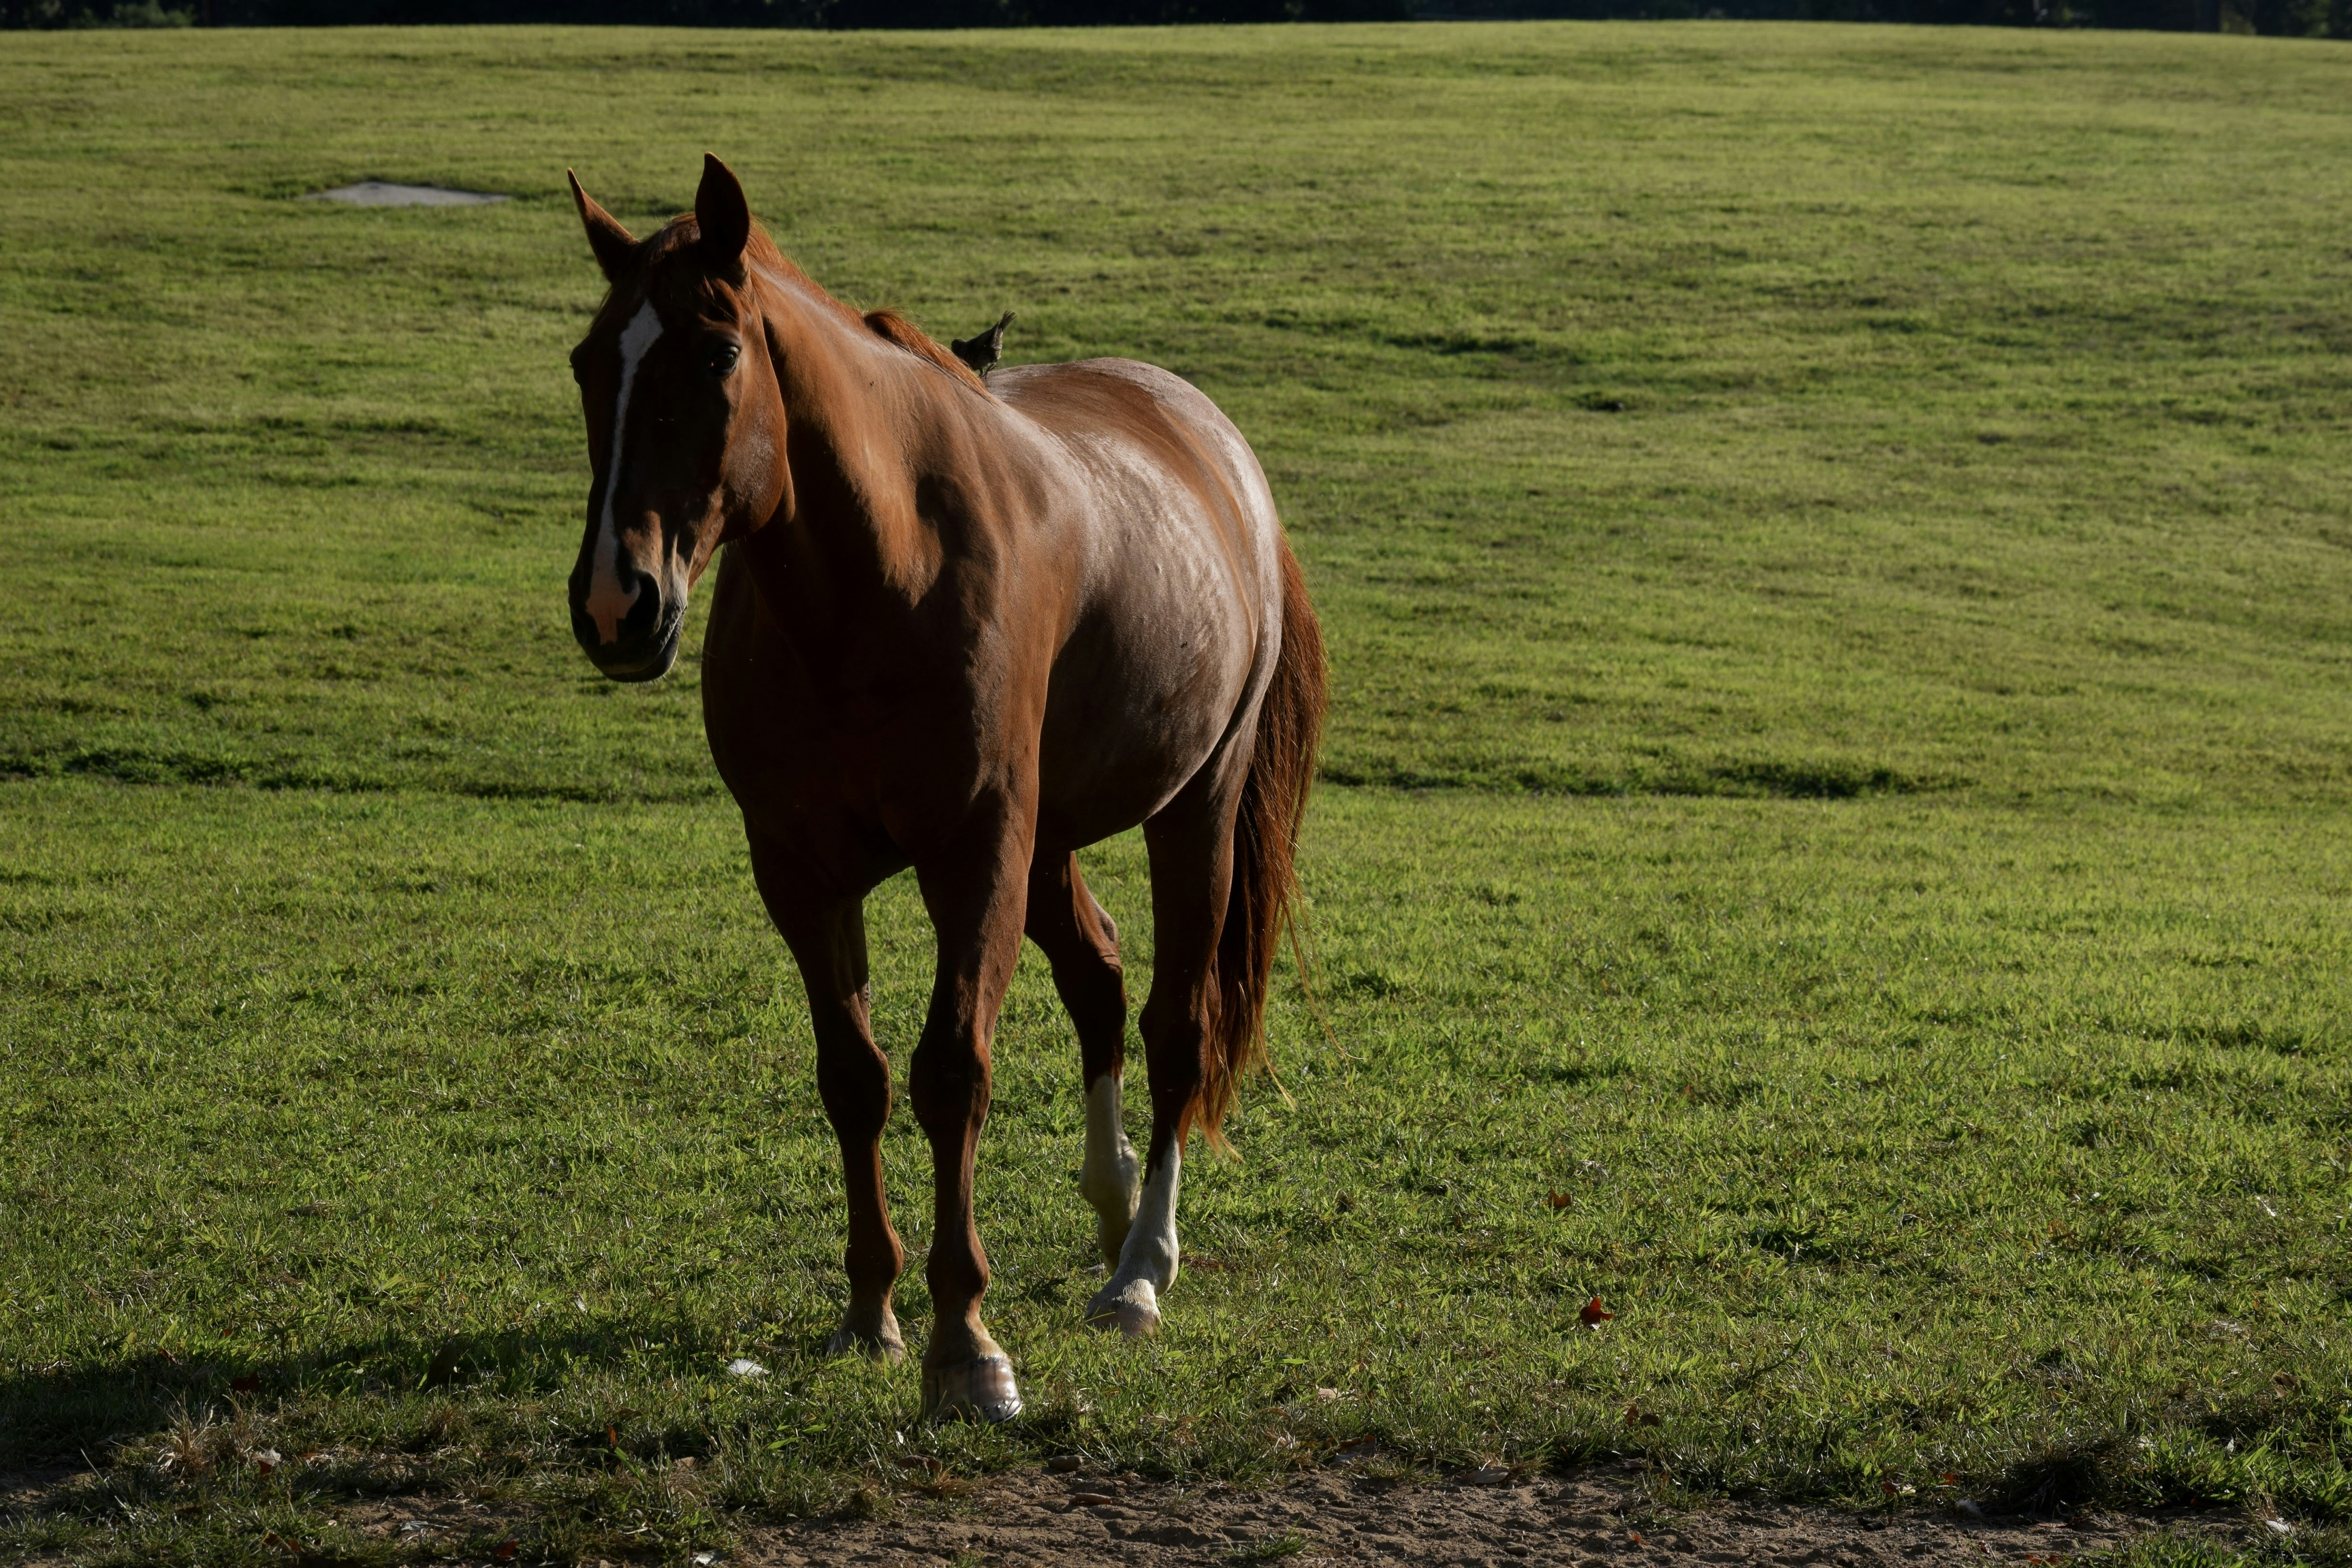 Horse at Carousel Park in Delaware.